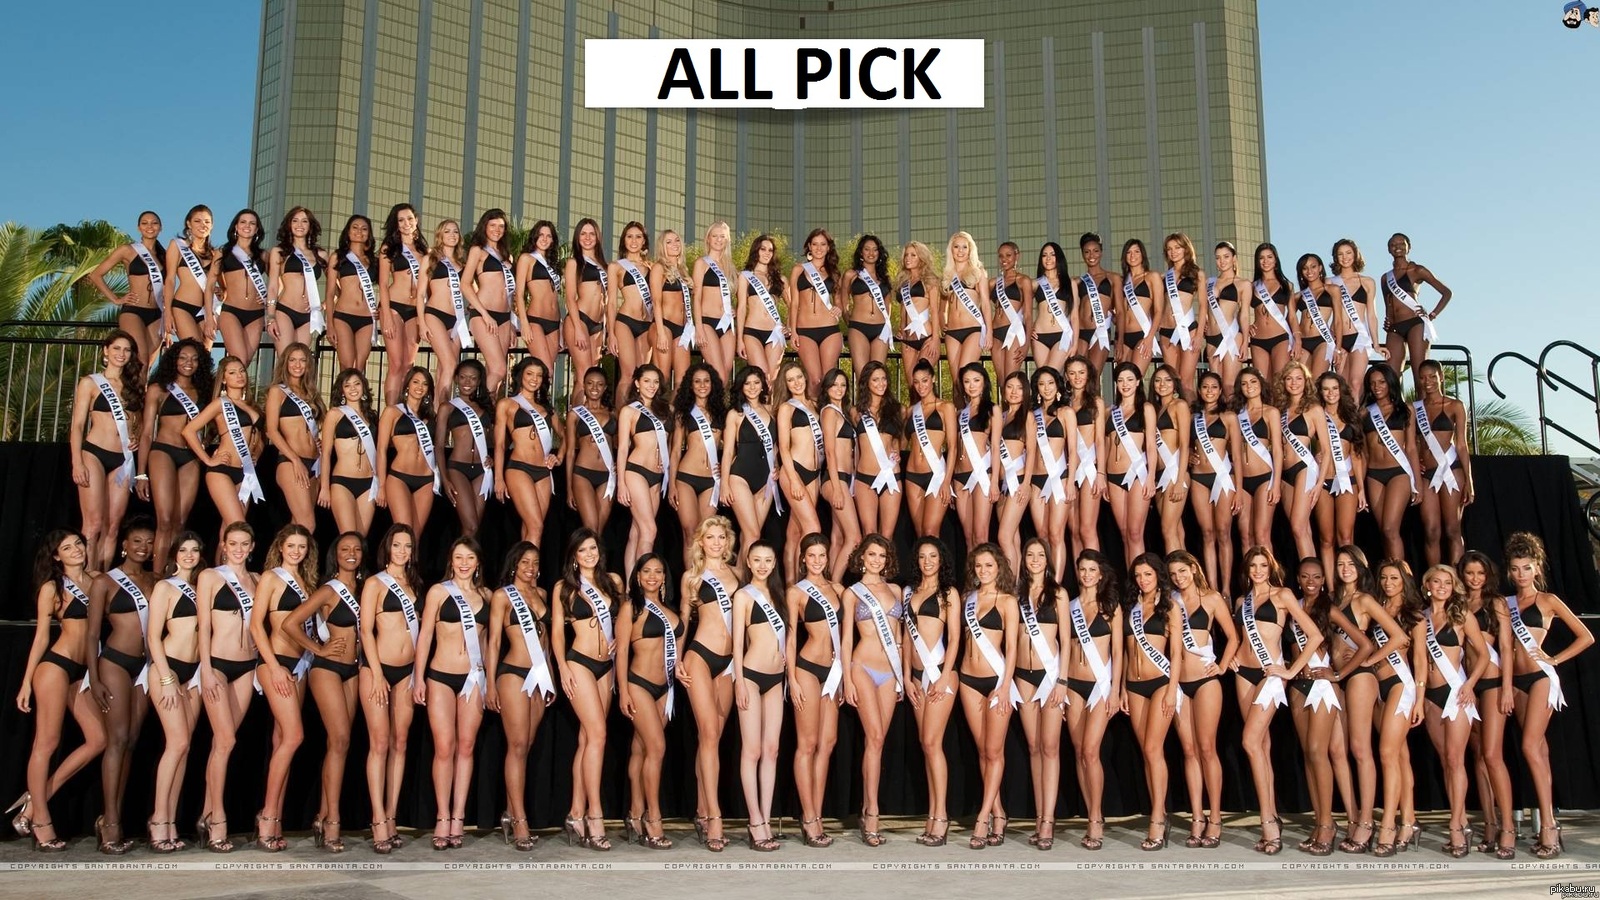 Body image groups of naked women